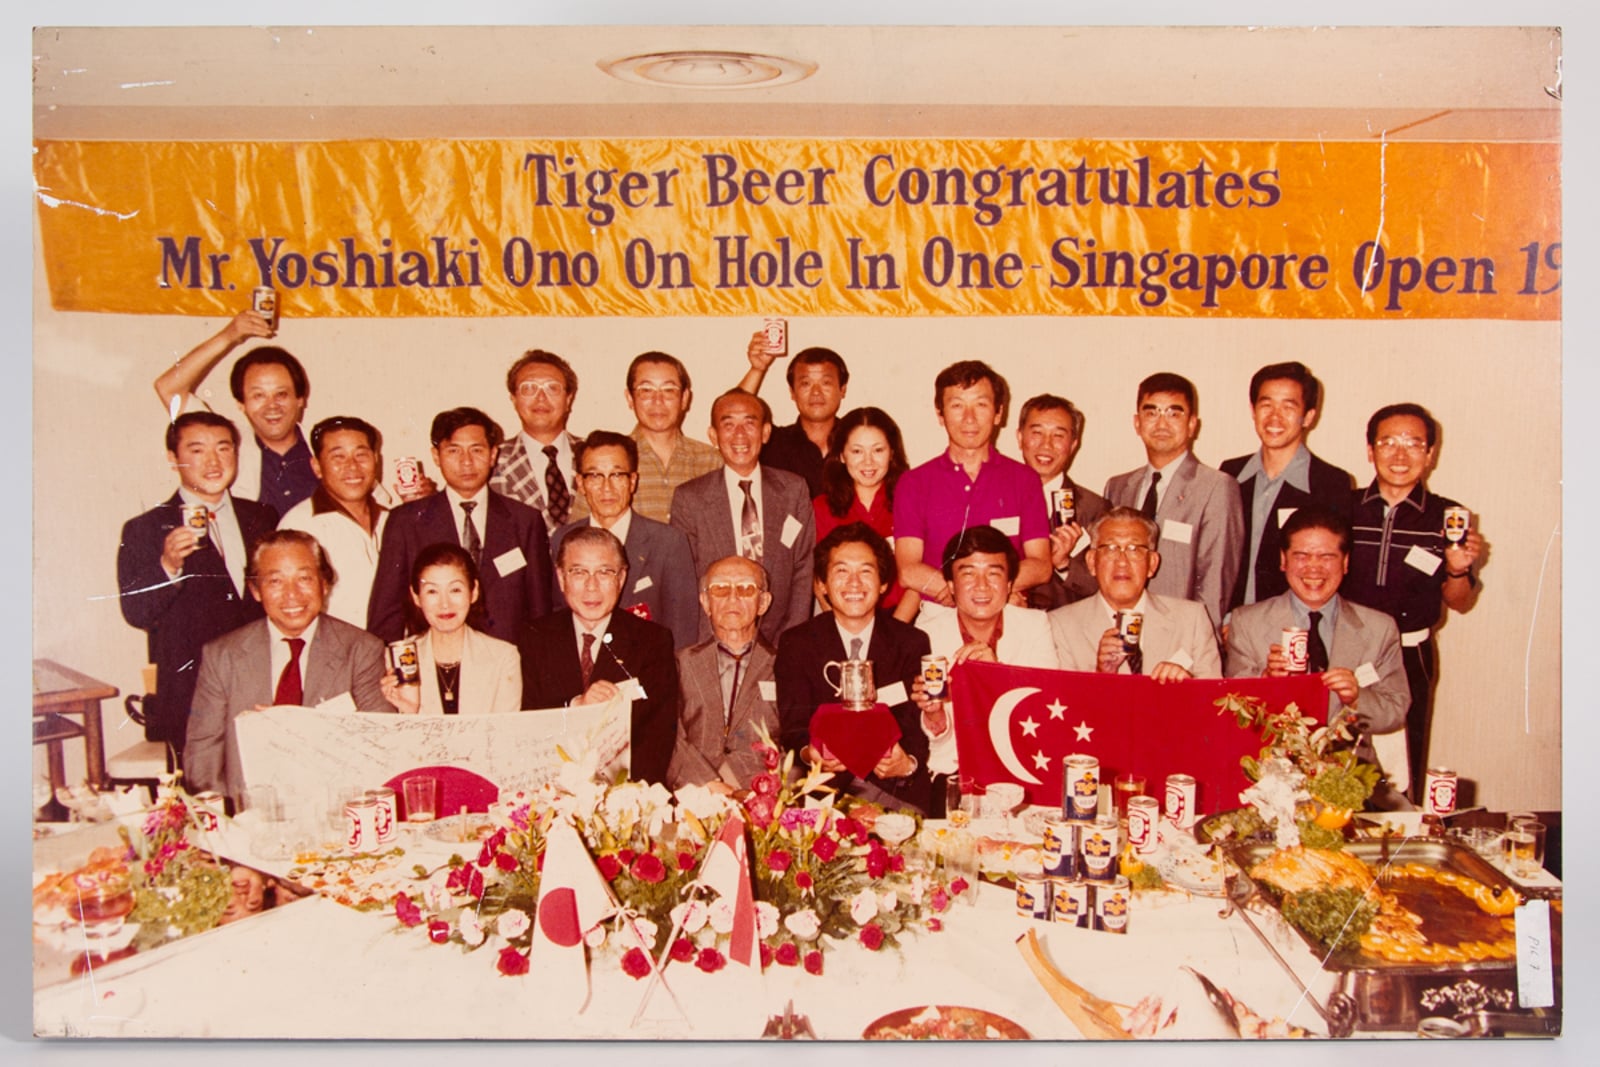 Tiger Beer Staff Photograph 19xx